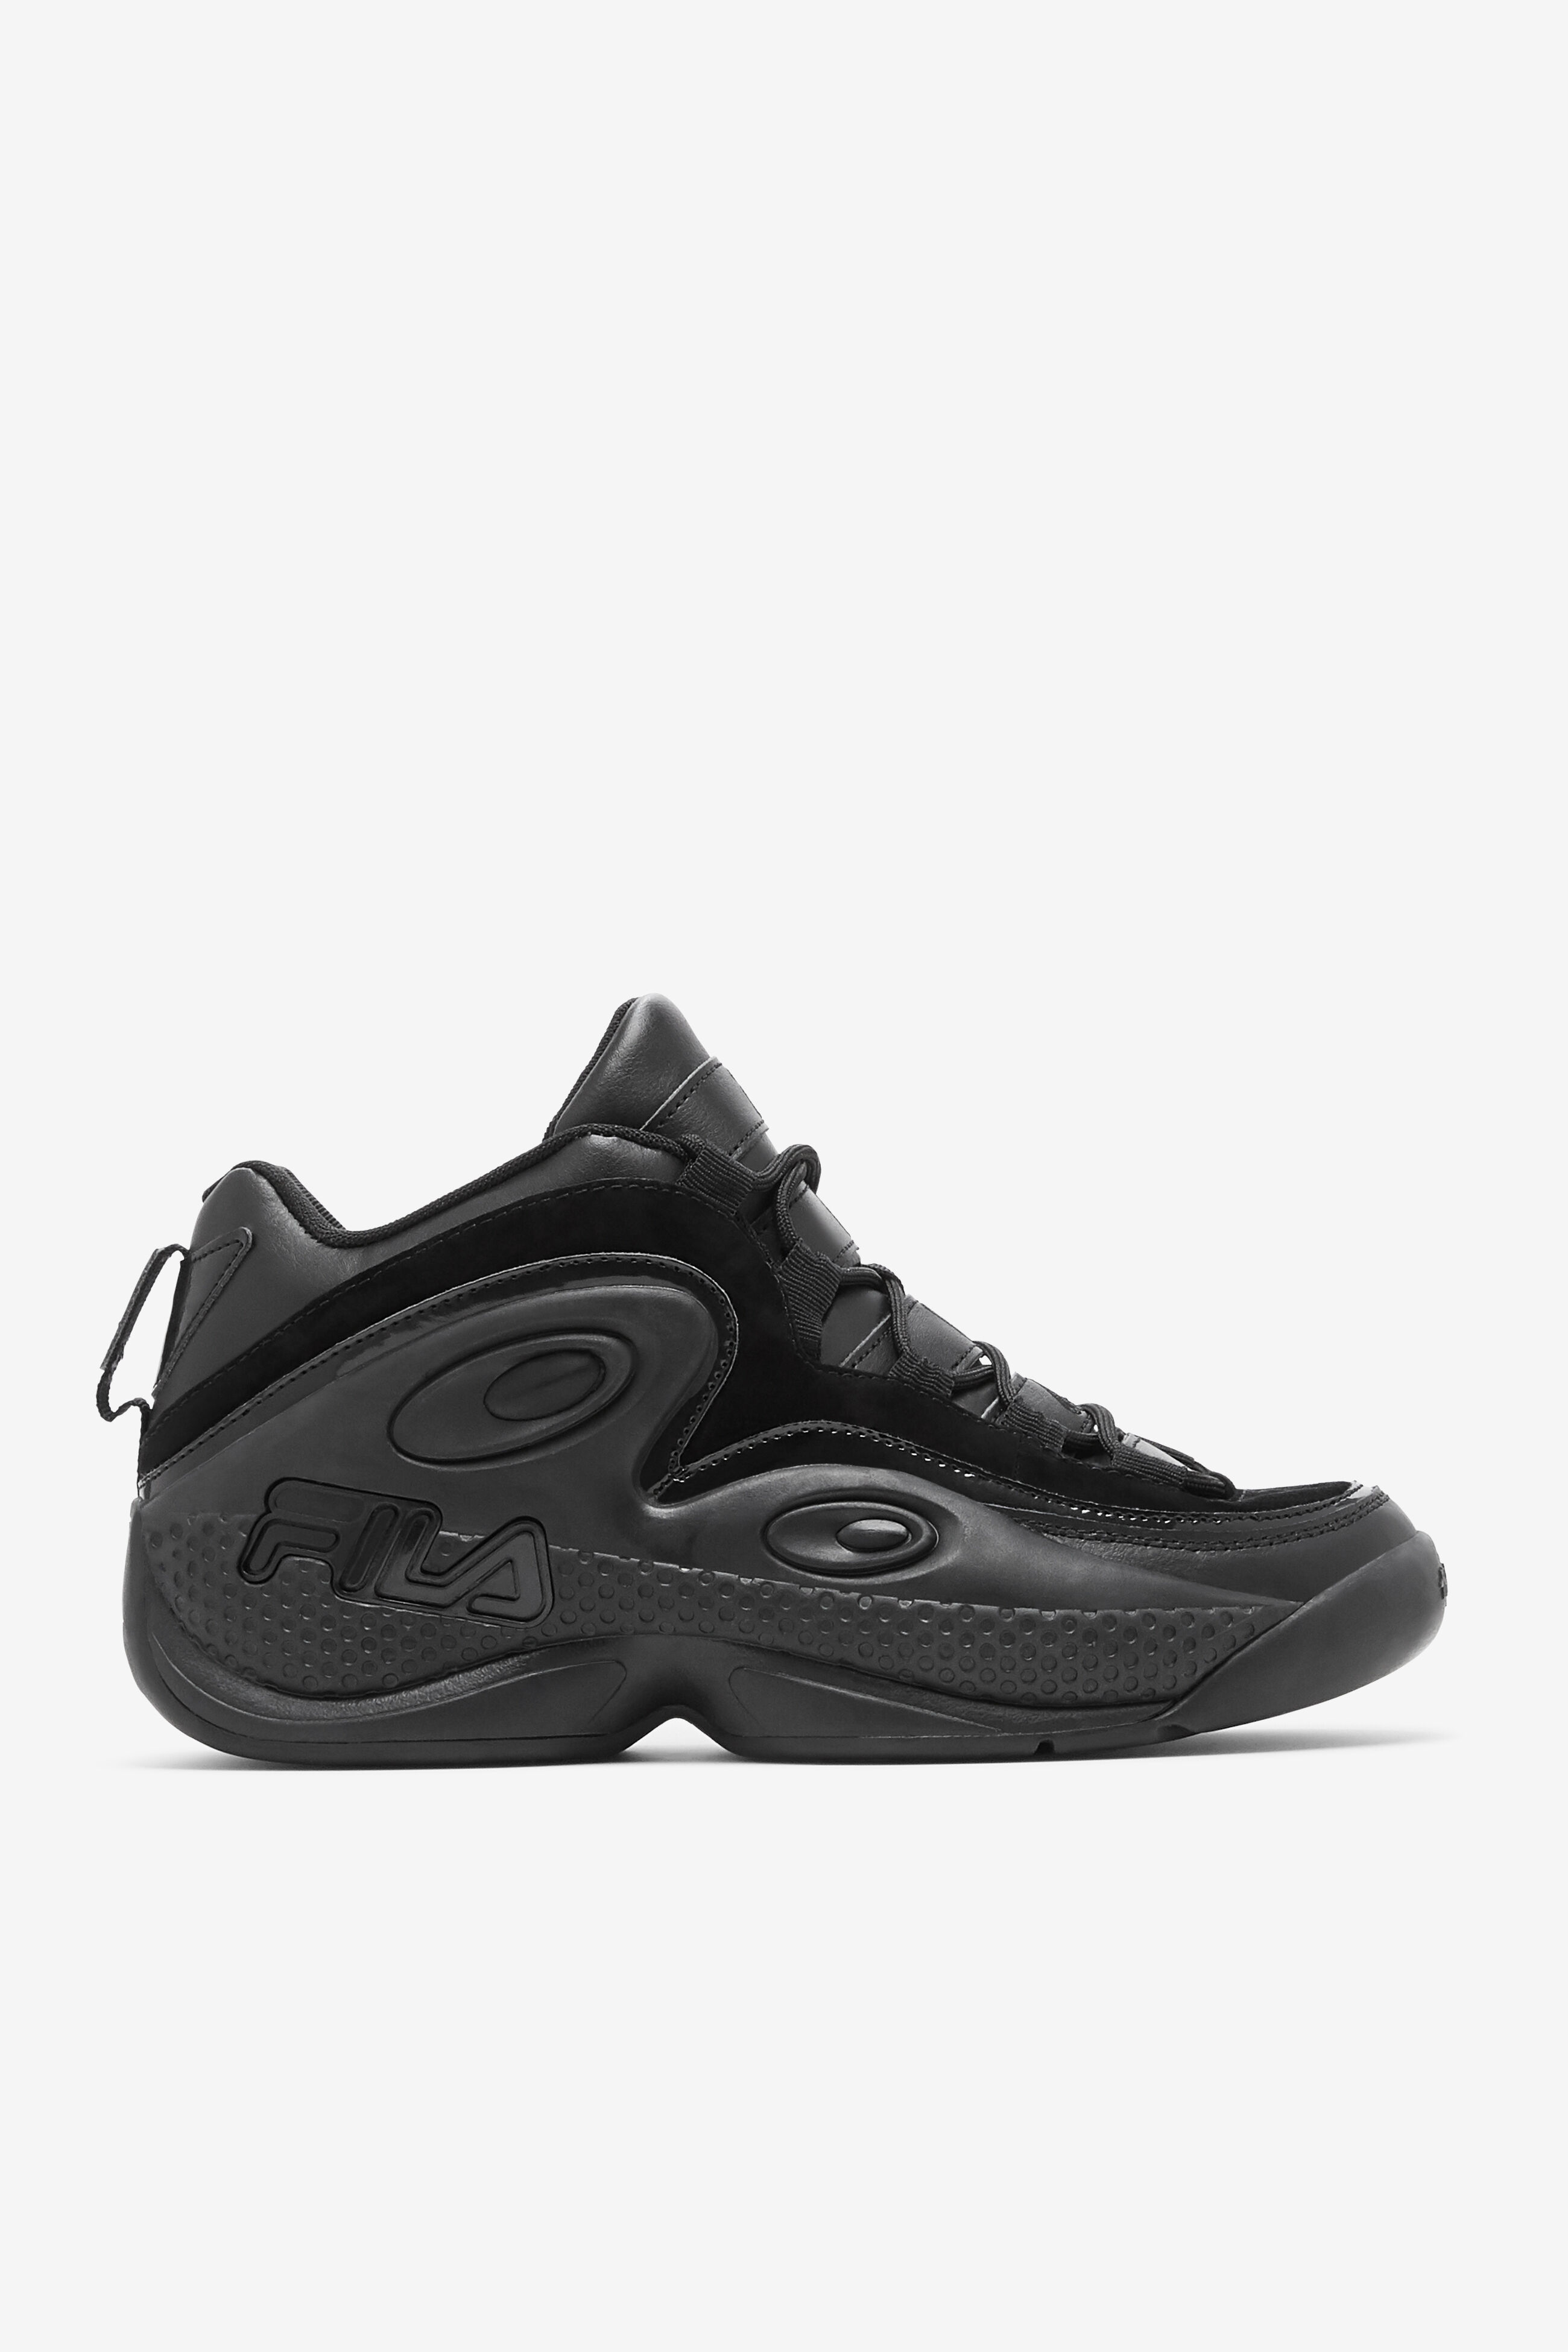 Grant Hill 3 All Black Basketball Shoes | Fila 1BM01358